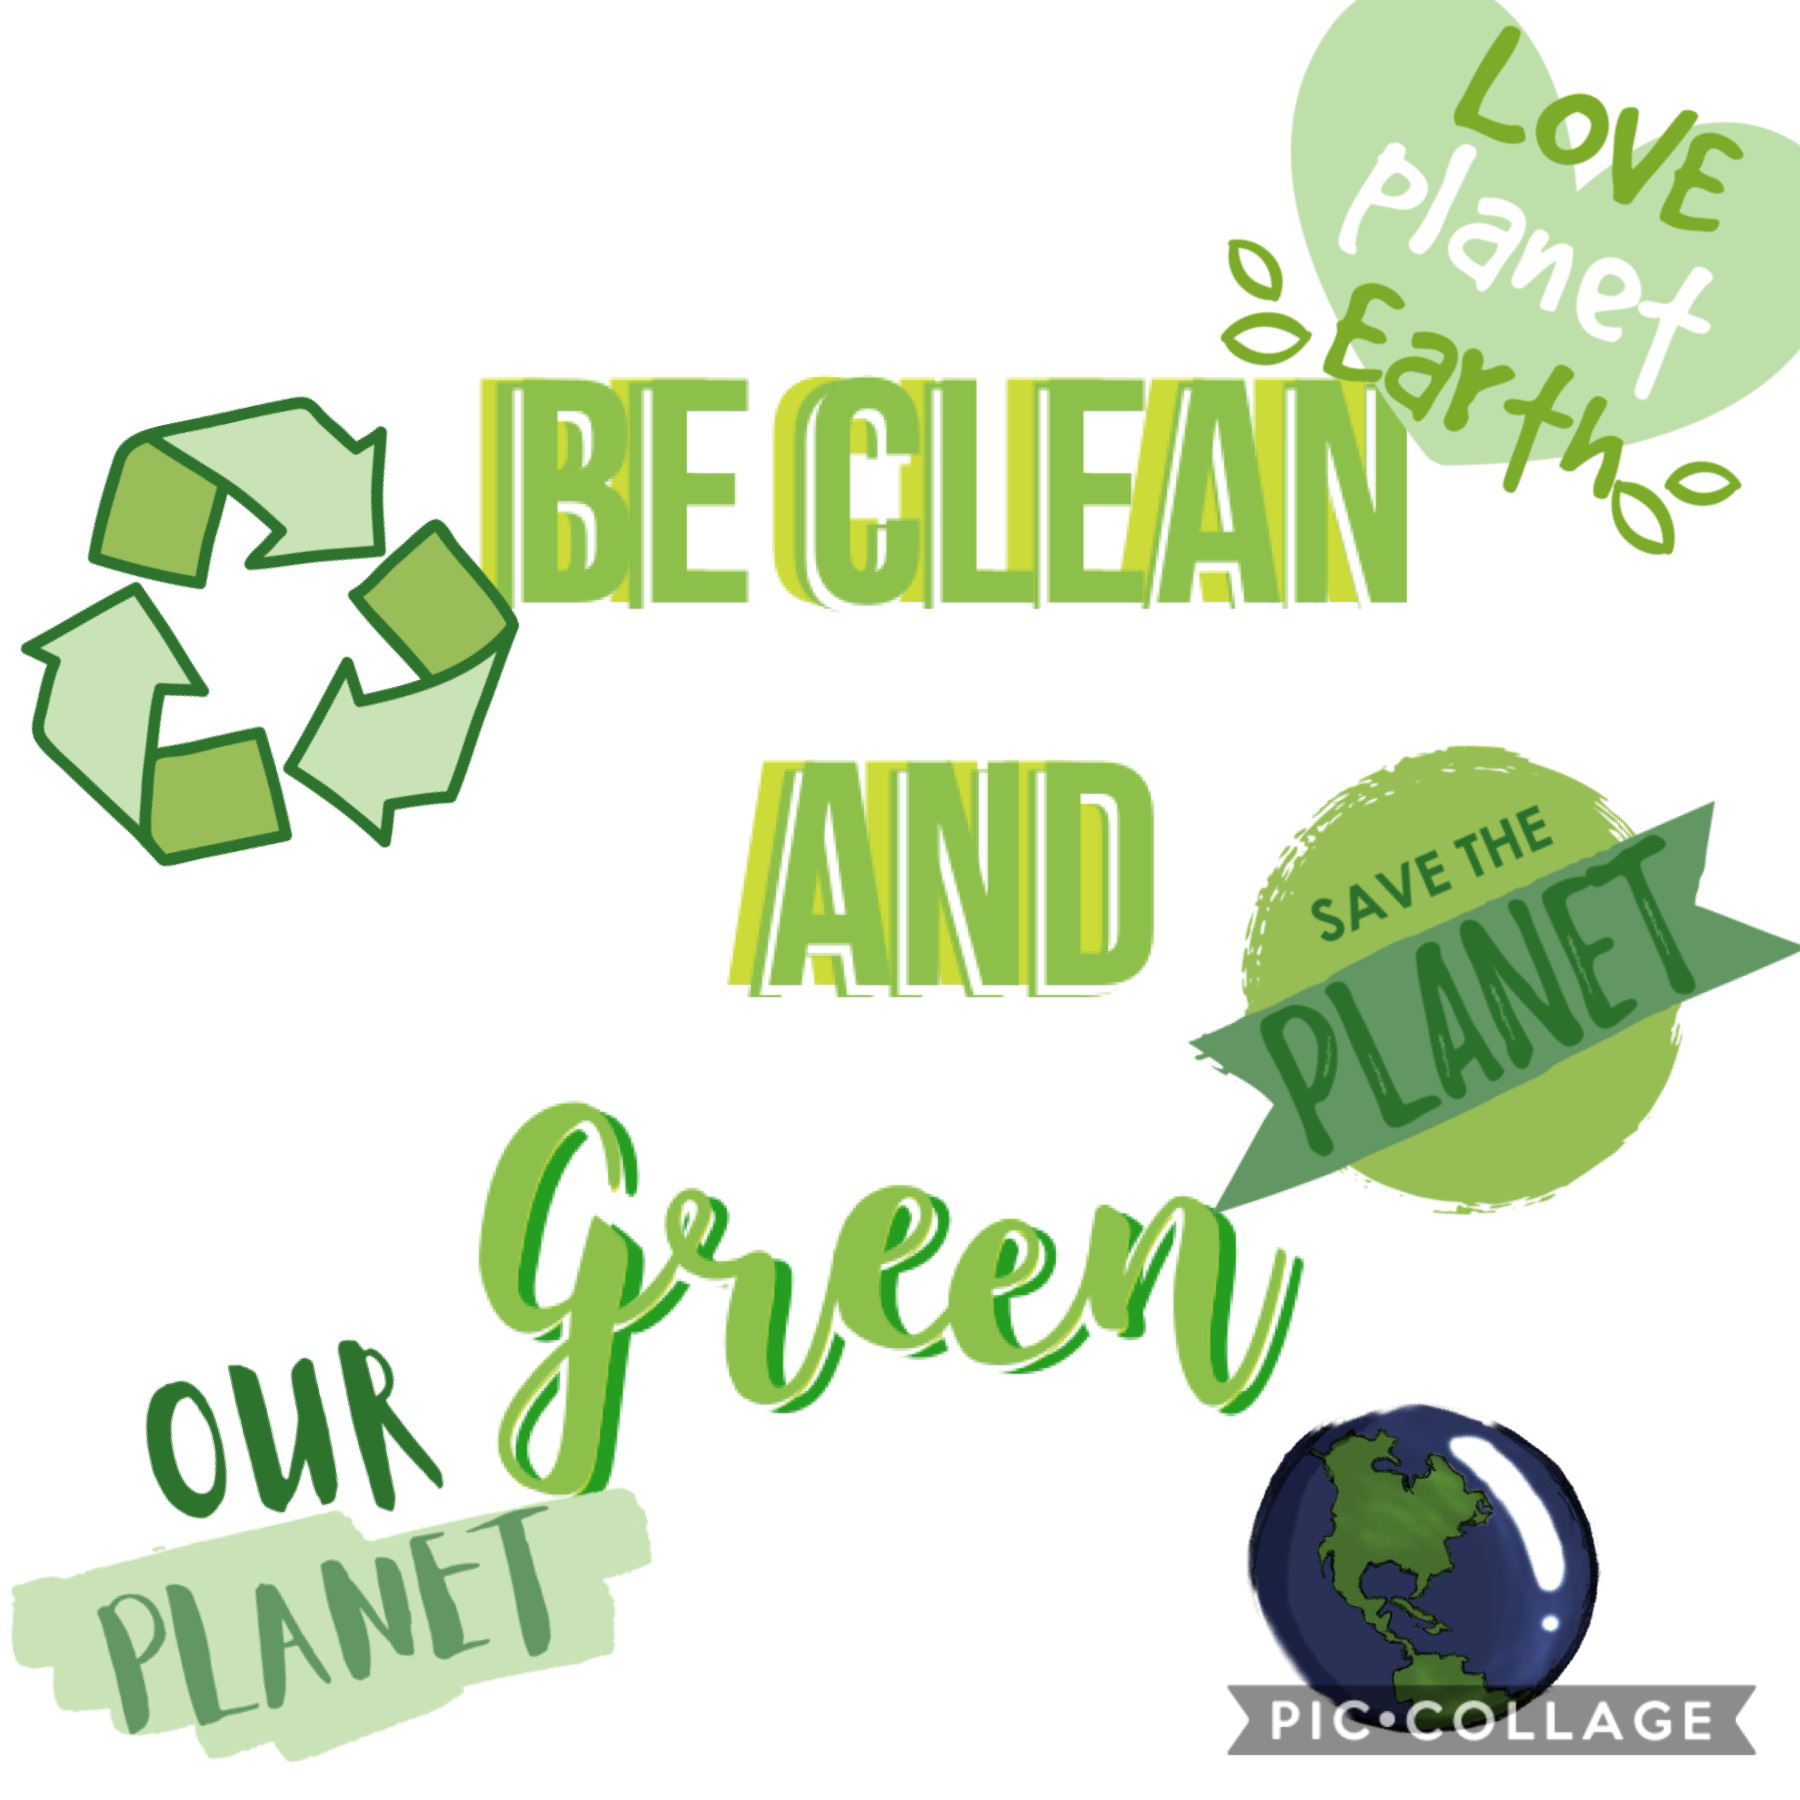 Keep the world clean